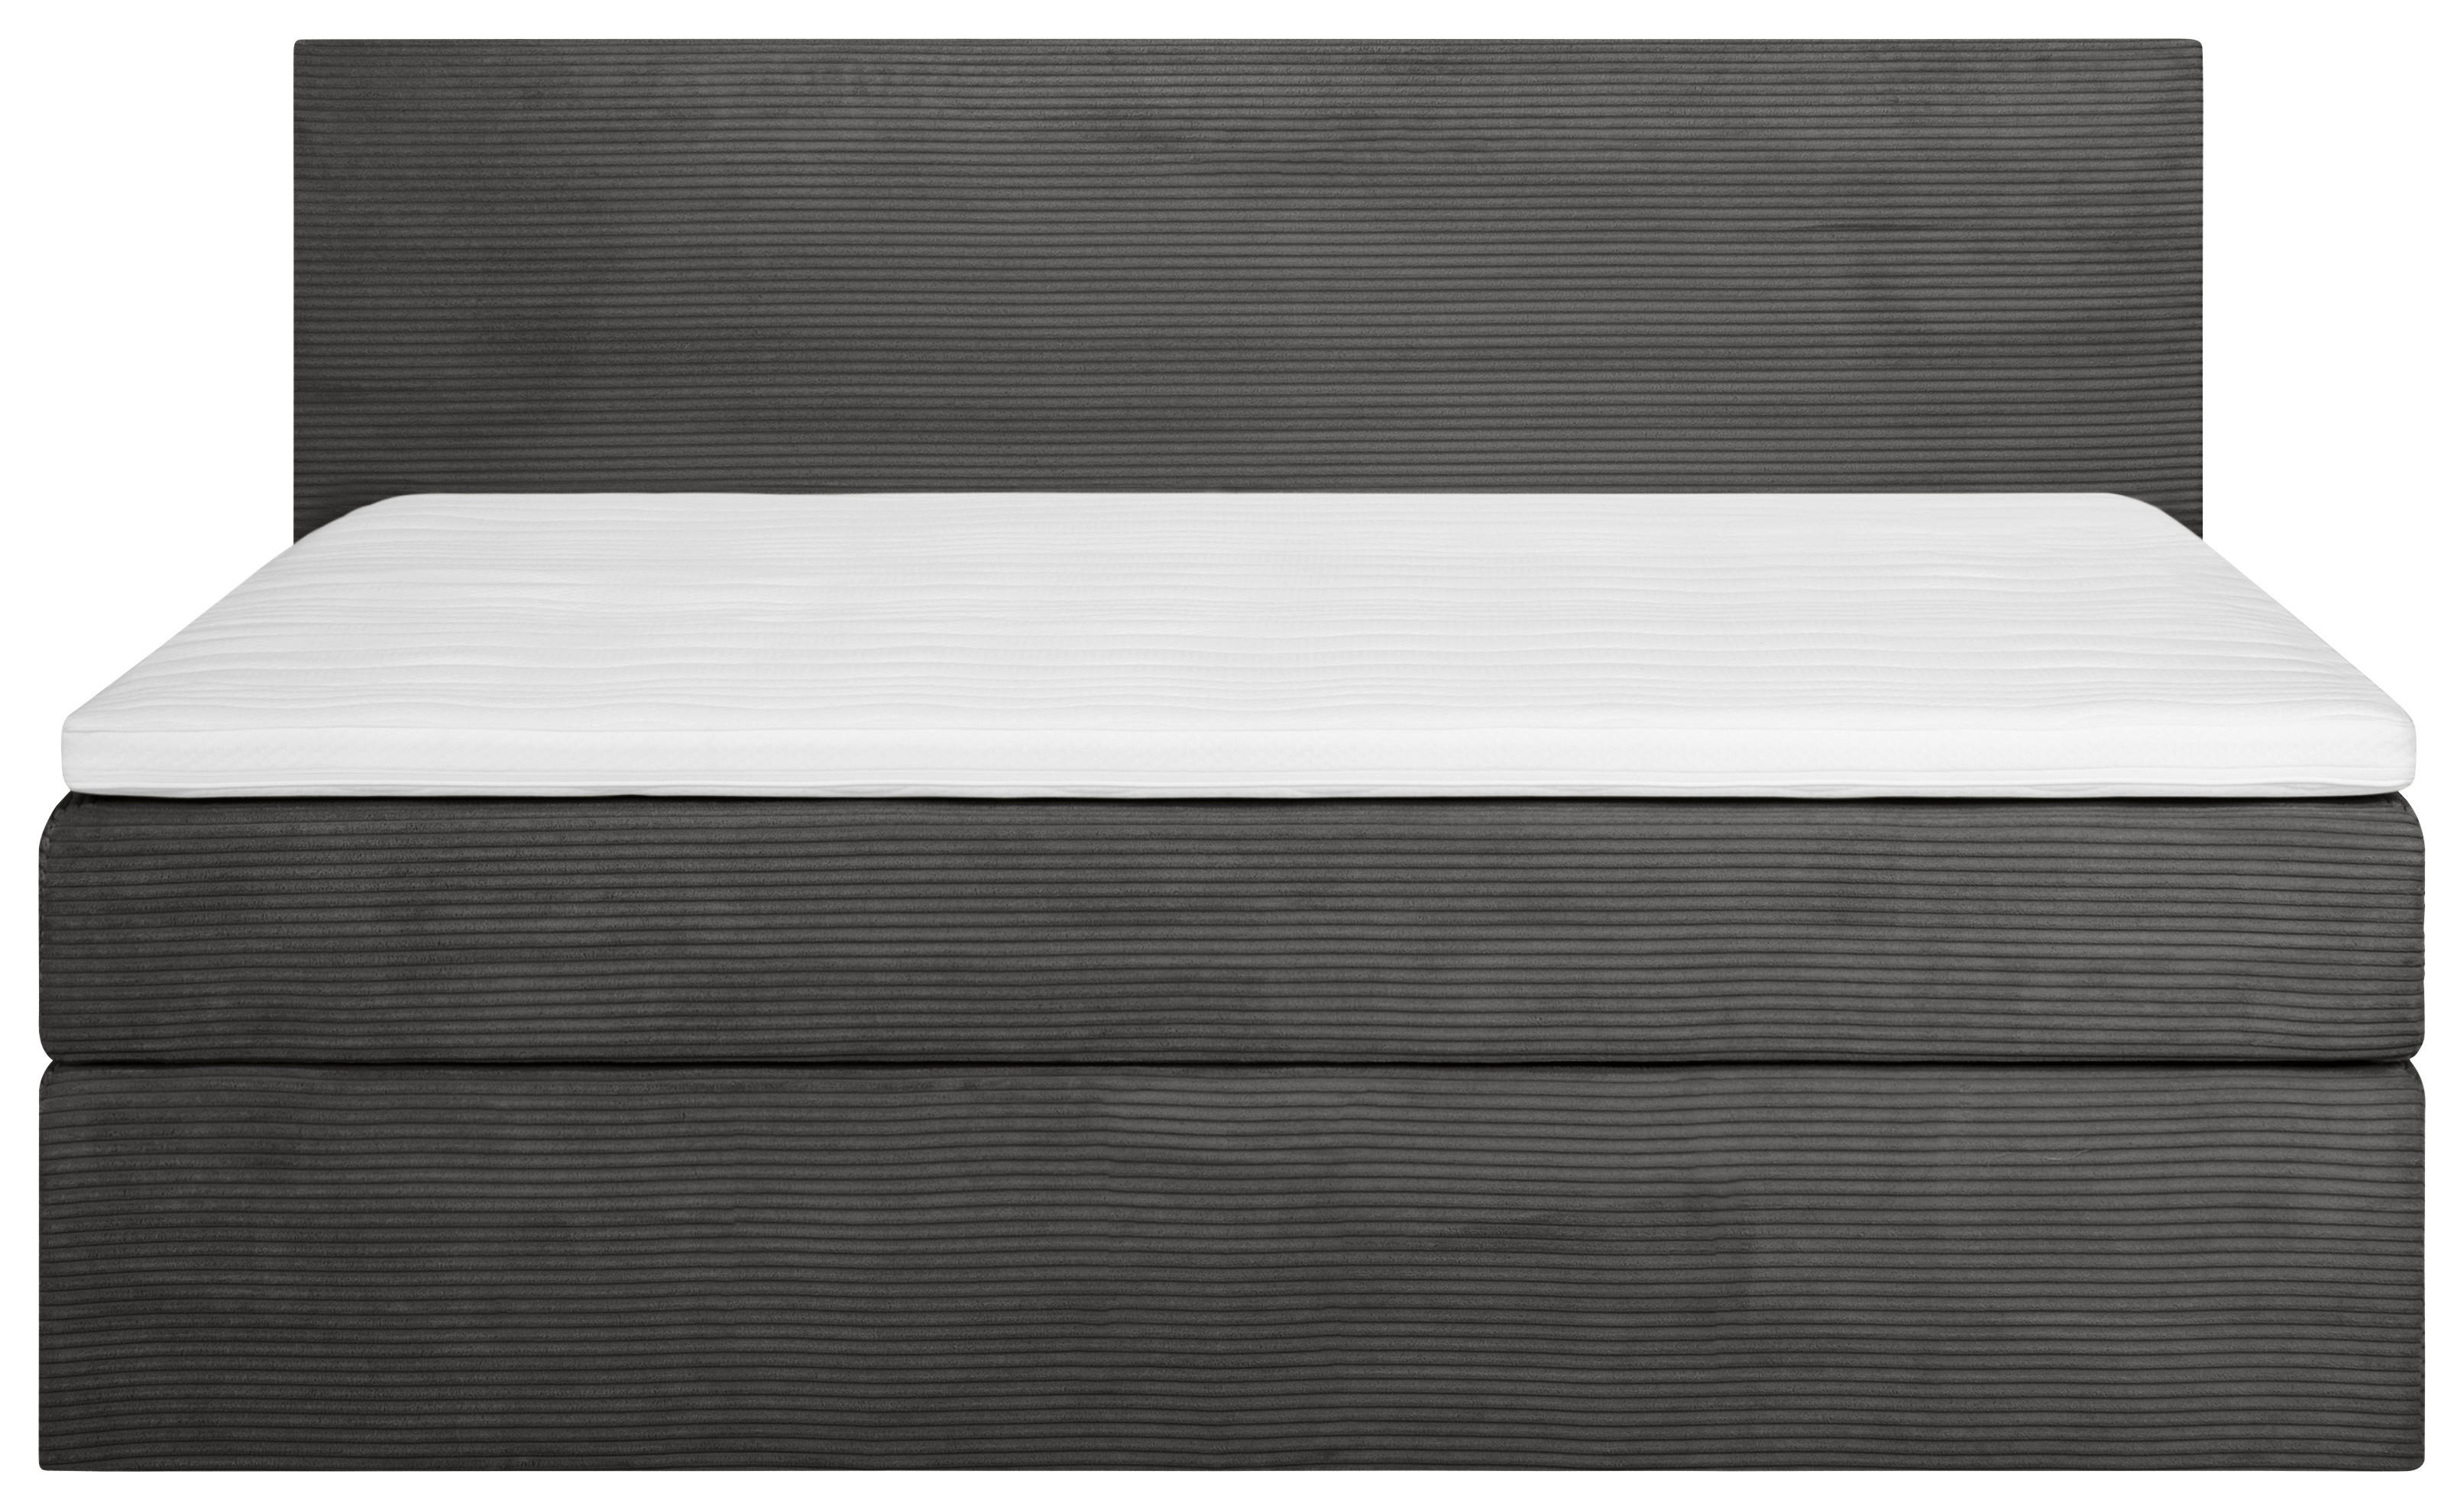 BOXSPRINGBETT 180/200 cm  in Grau  - Schwarz/Grau, KONVENTIONELL, Holz/Textil (180/200cm) - Boxxx